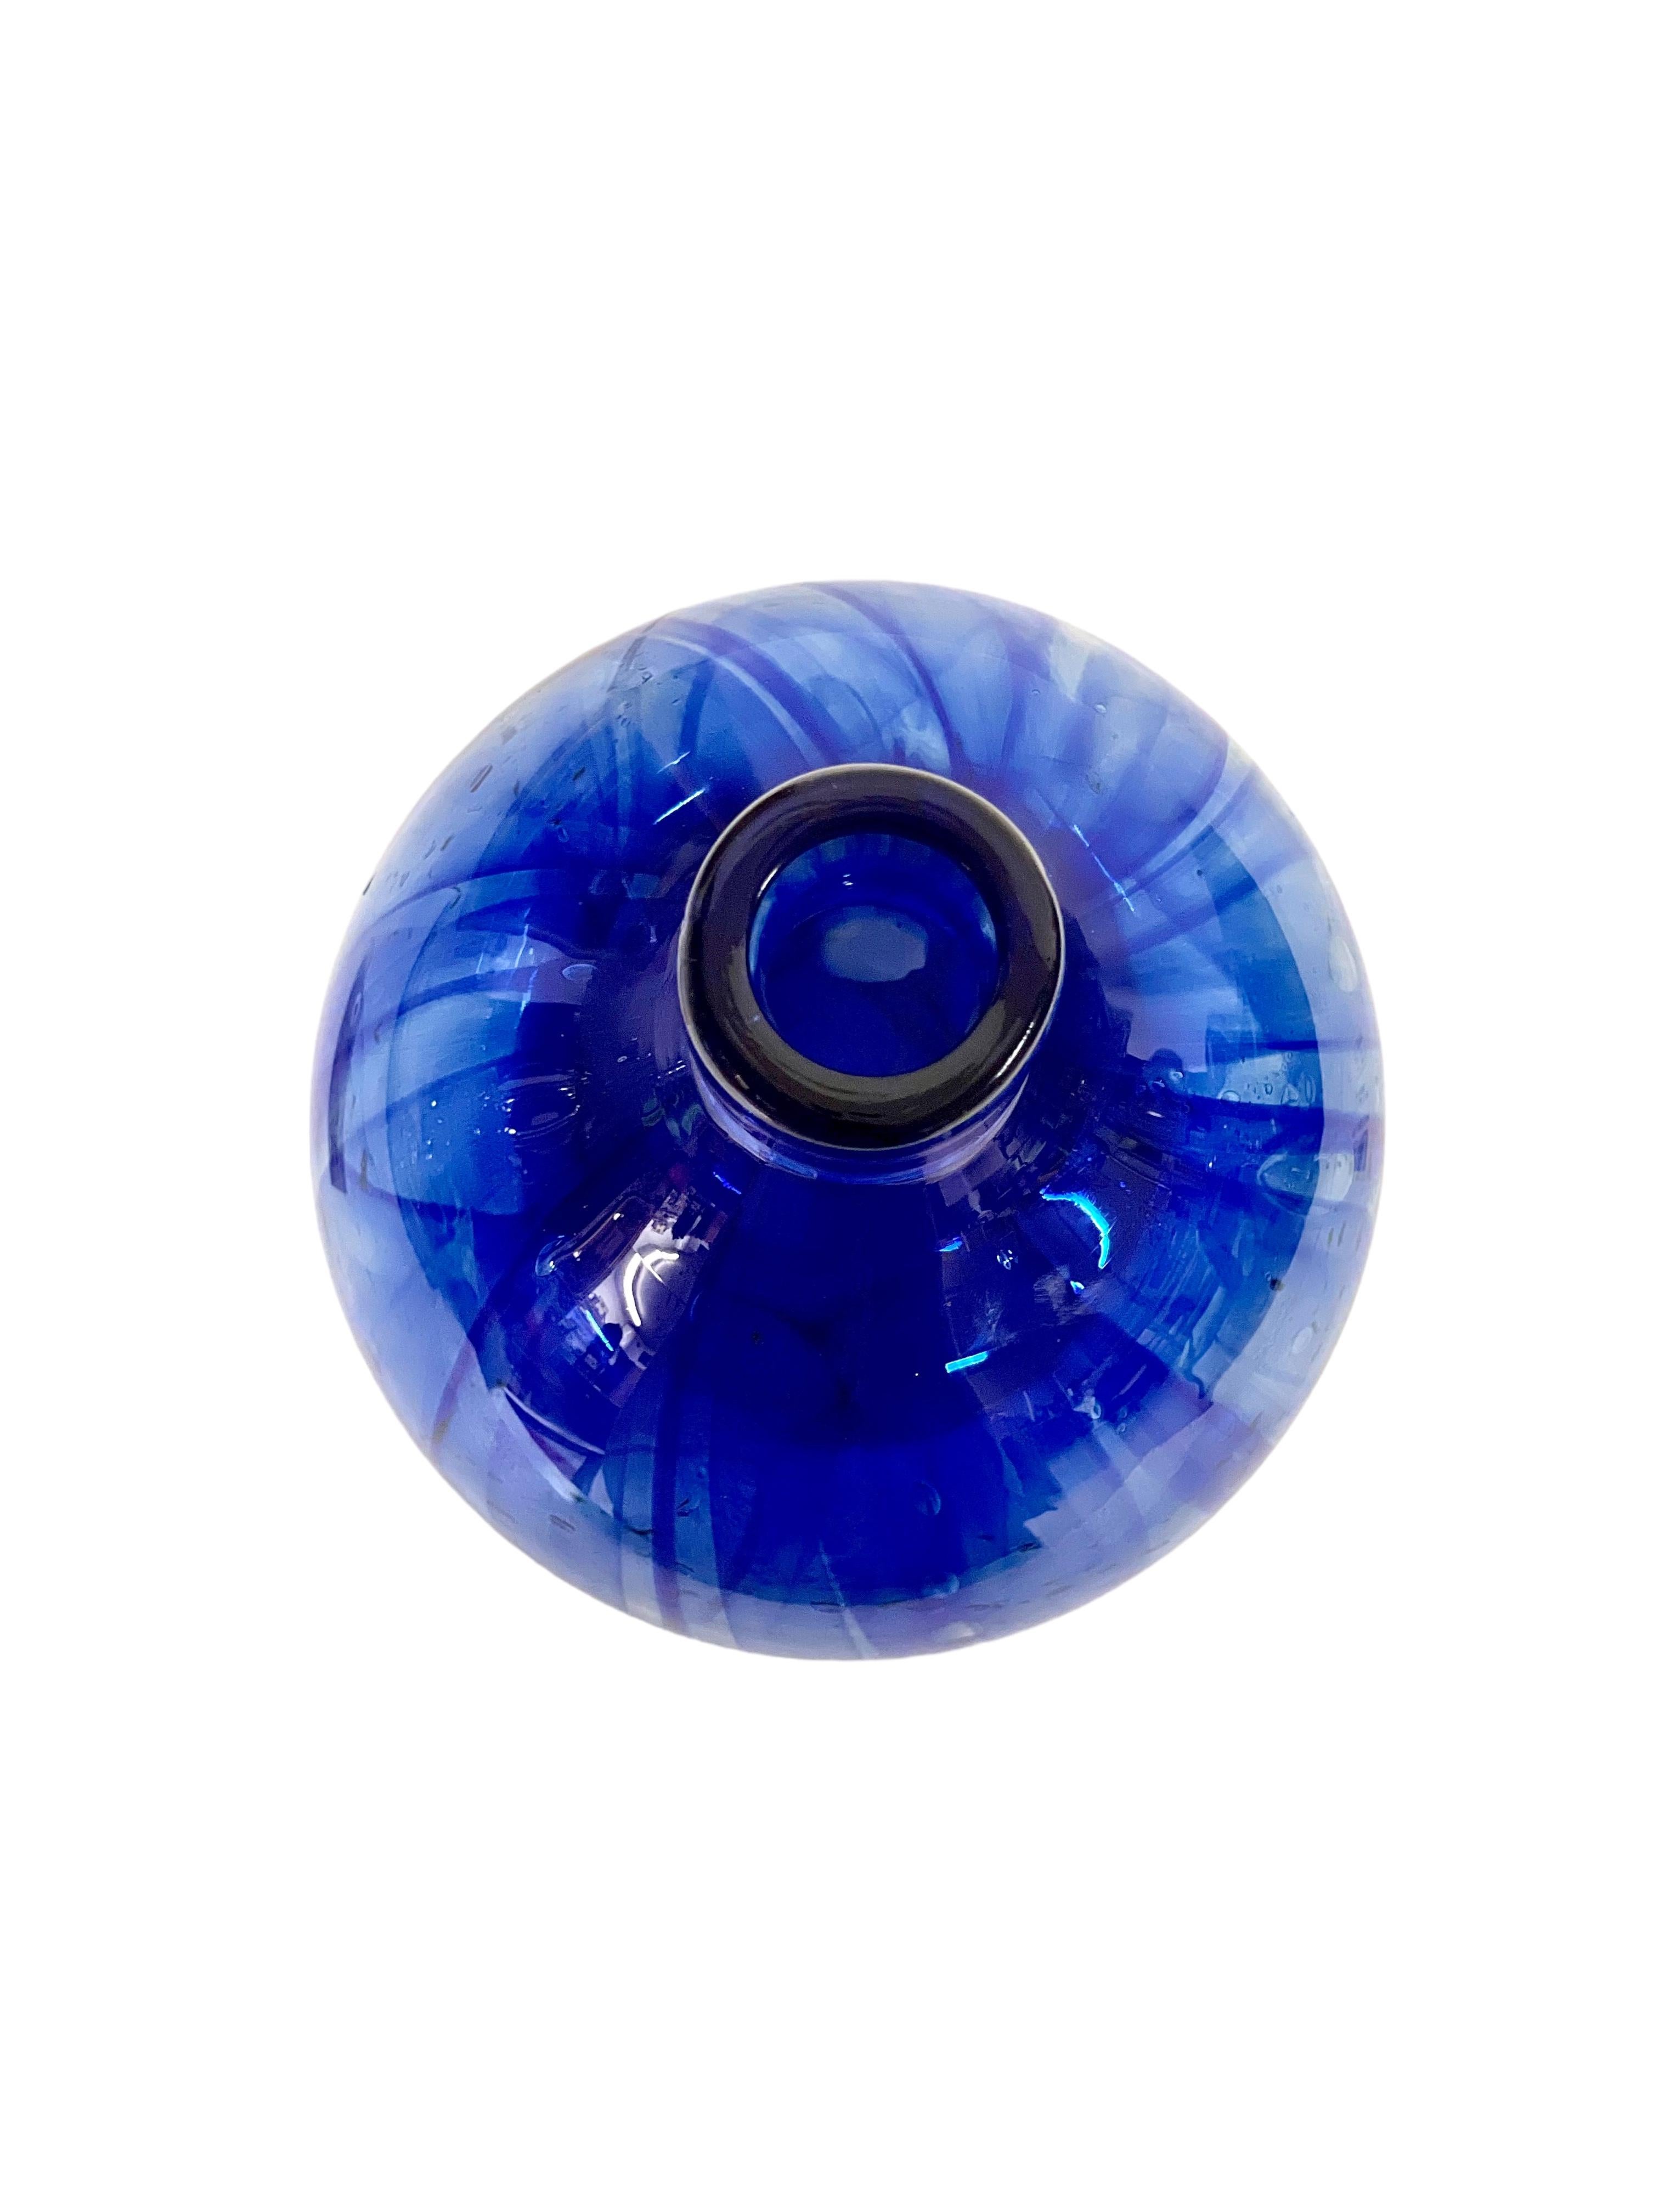 Blue Blown Glass Vase by Jean Claude Novaro For Sale 2